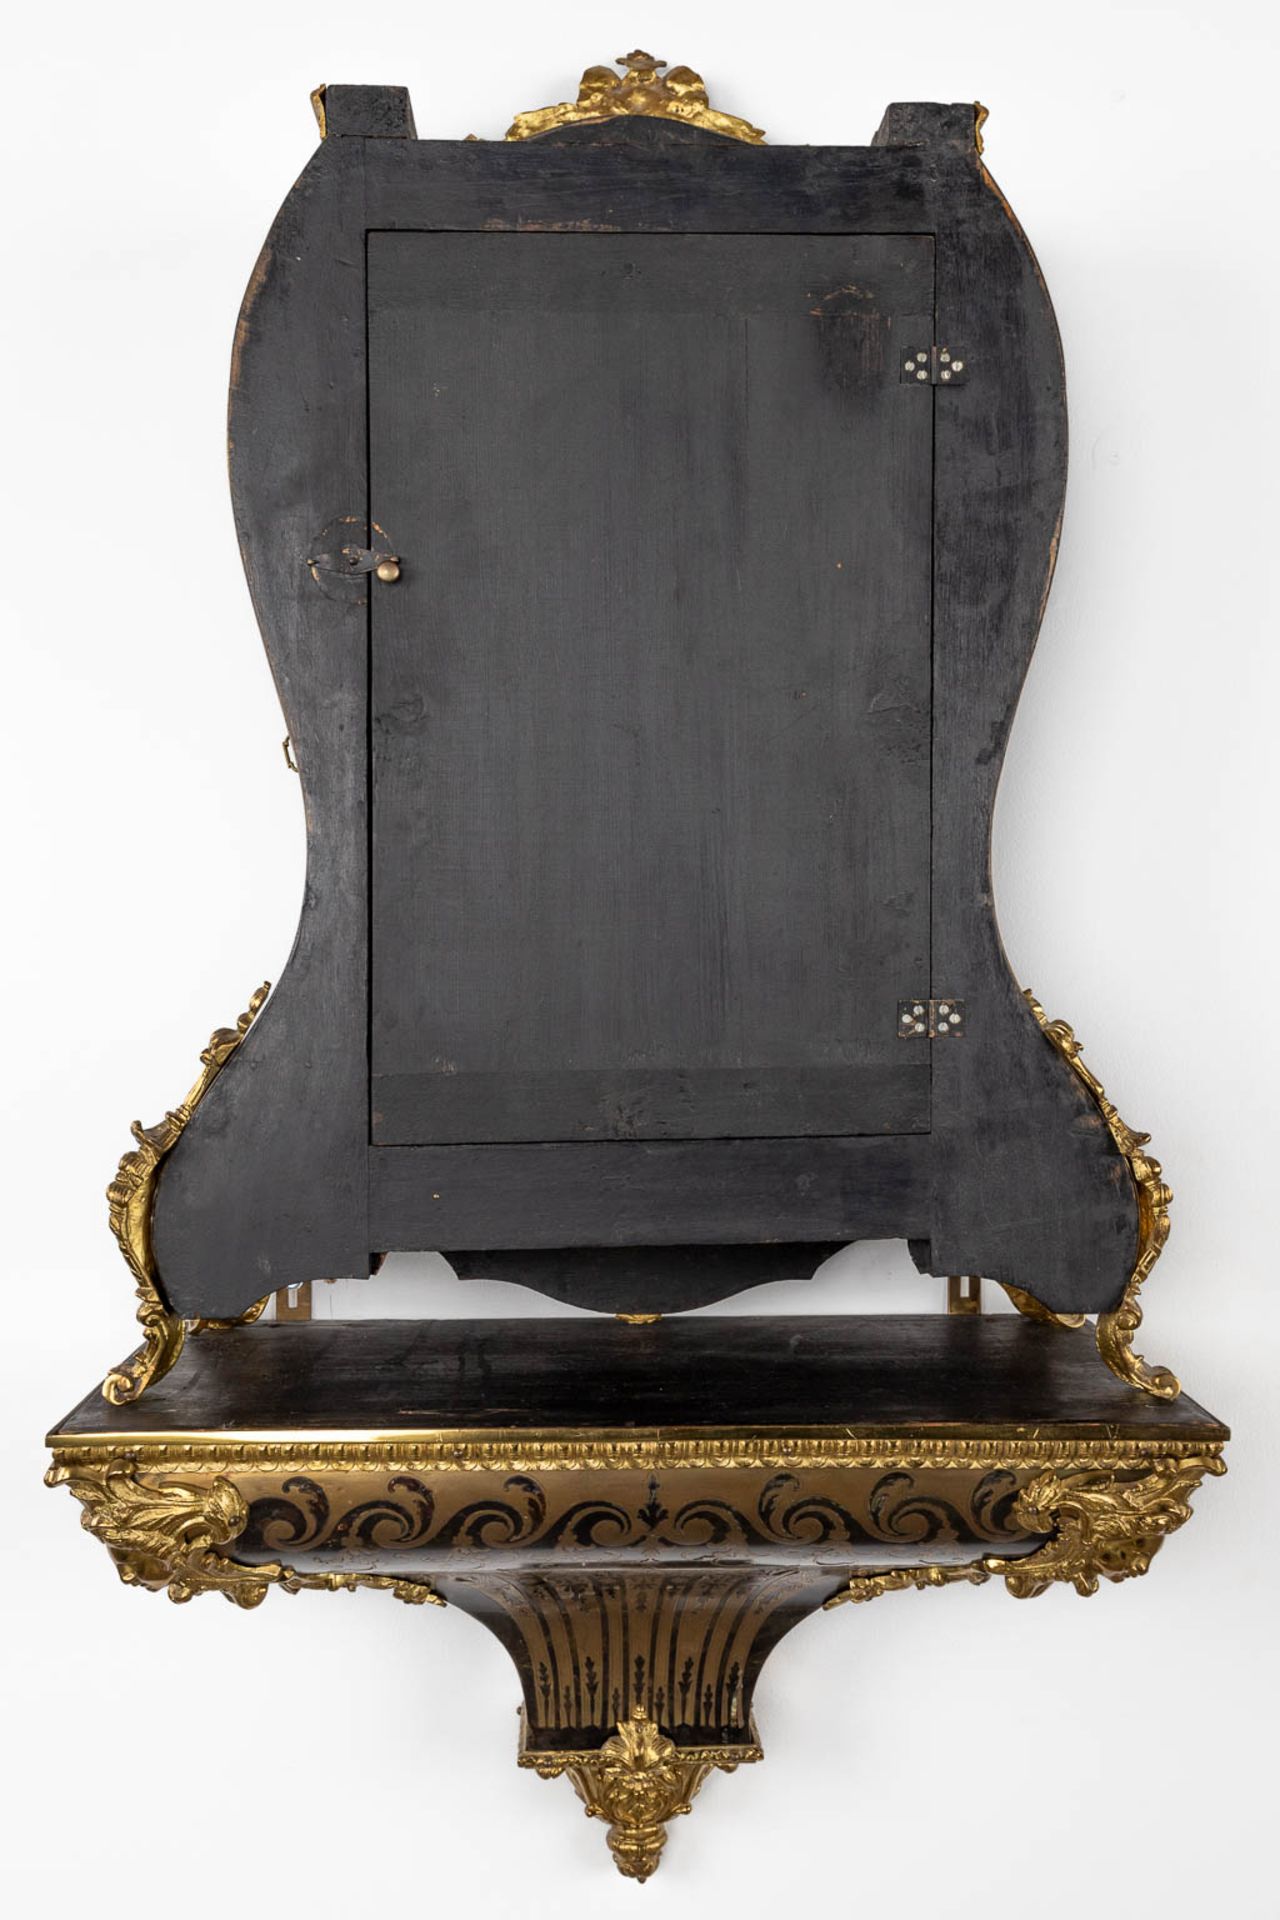 A large Cartel clock on a pedestal, Boulle Inlay, signed Gudin à Paris. 19th C. (D:24 x W:56 x H:145 - Image 16 of 16